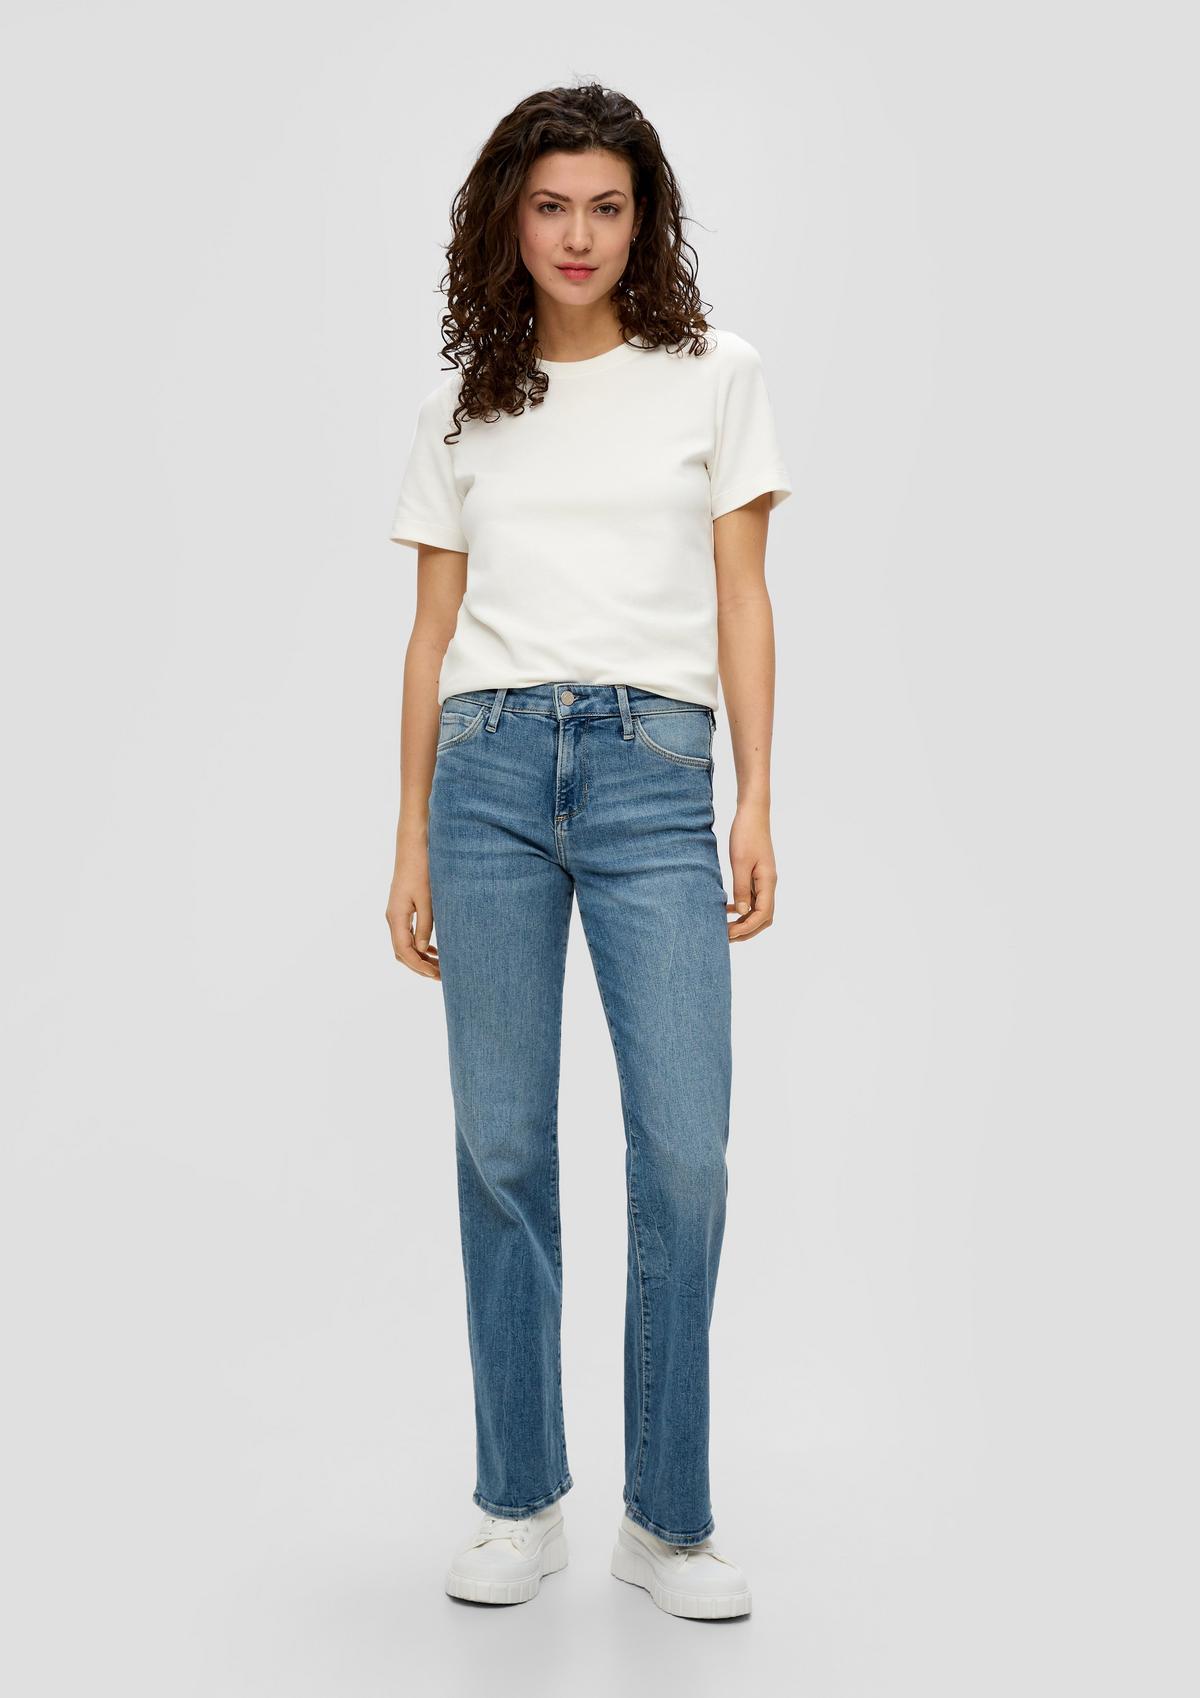 Selena jeans / regular fit / mid rise / flared leg